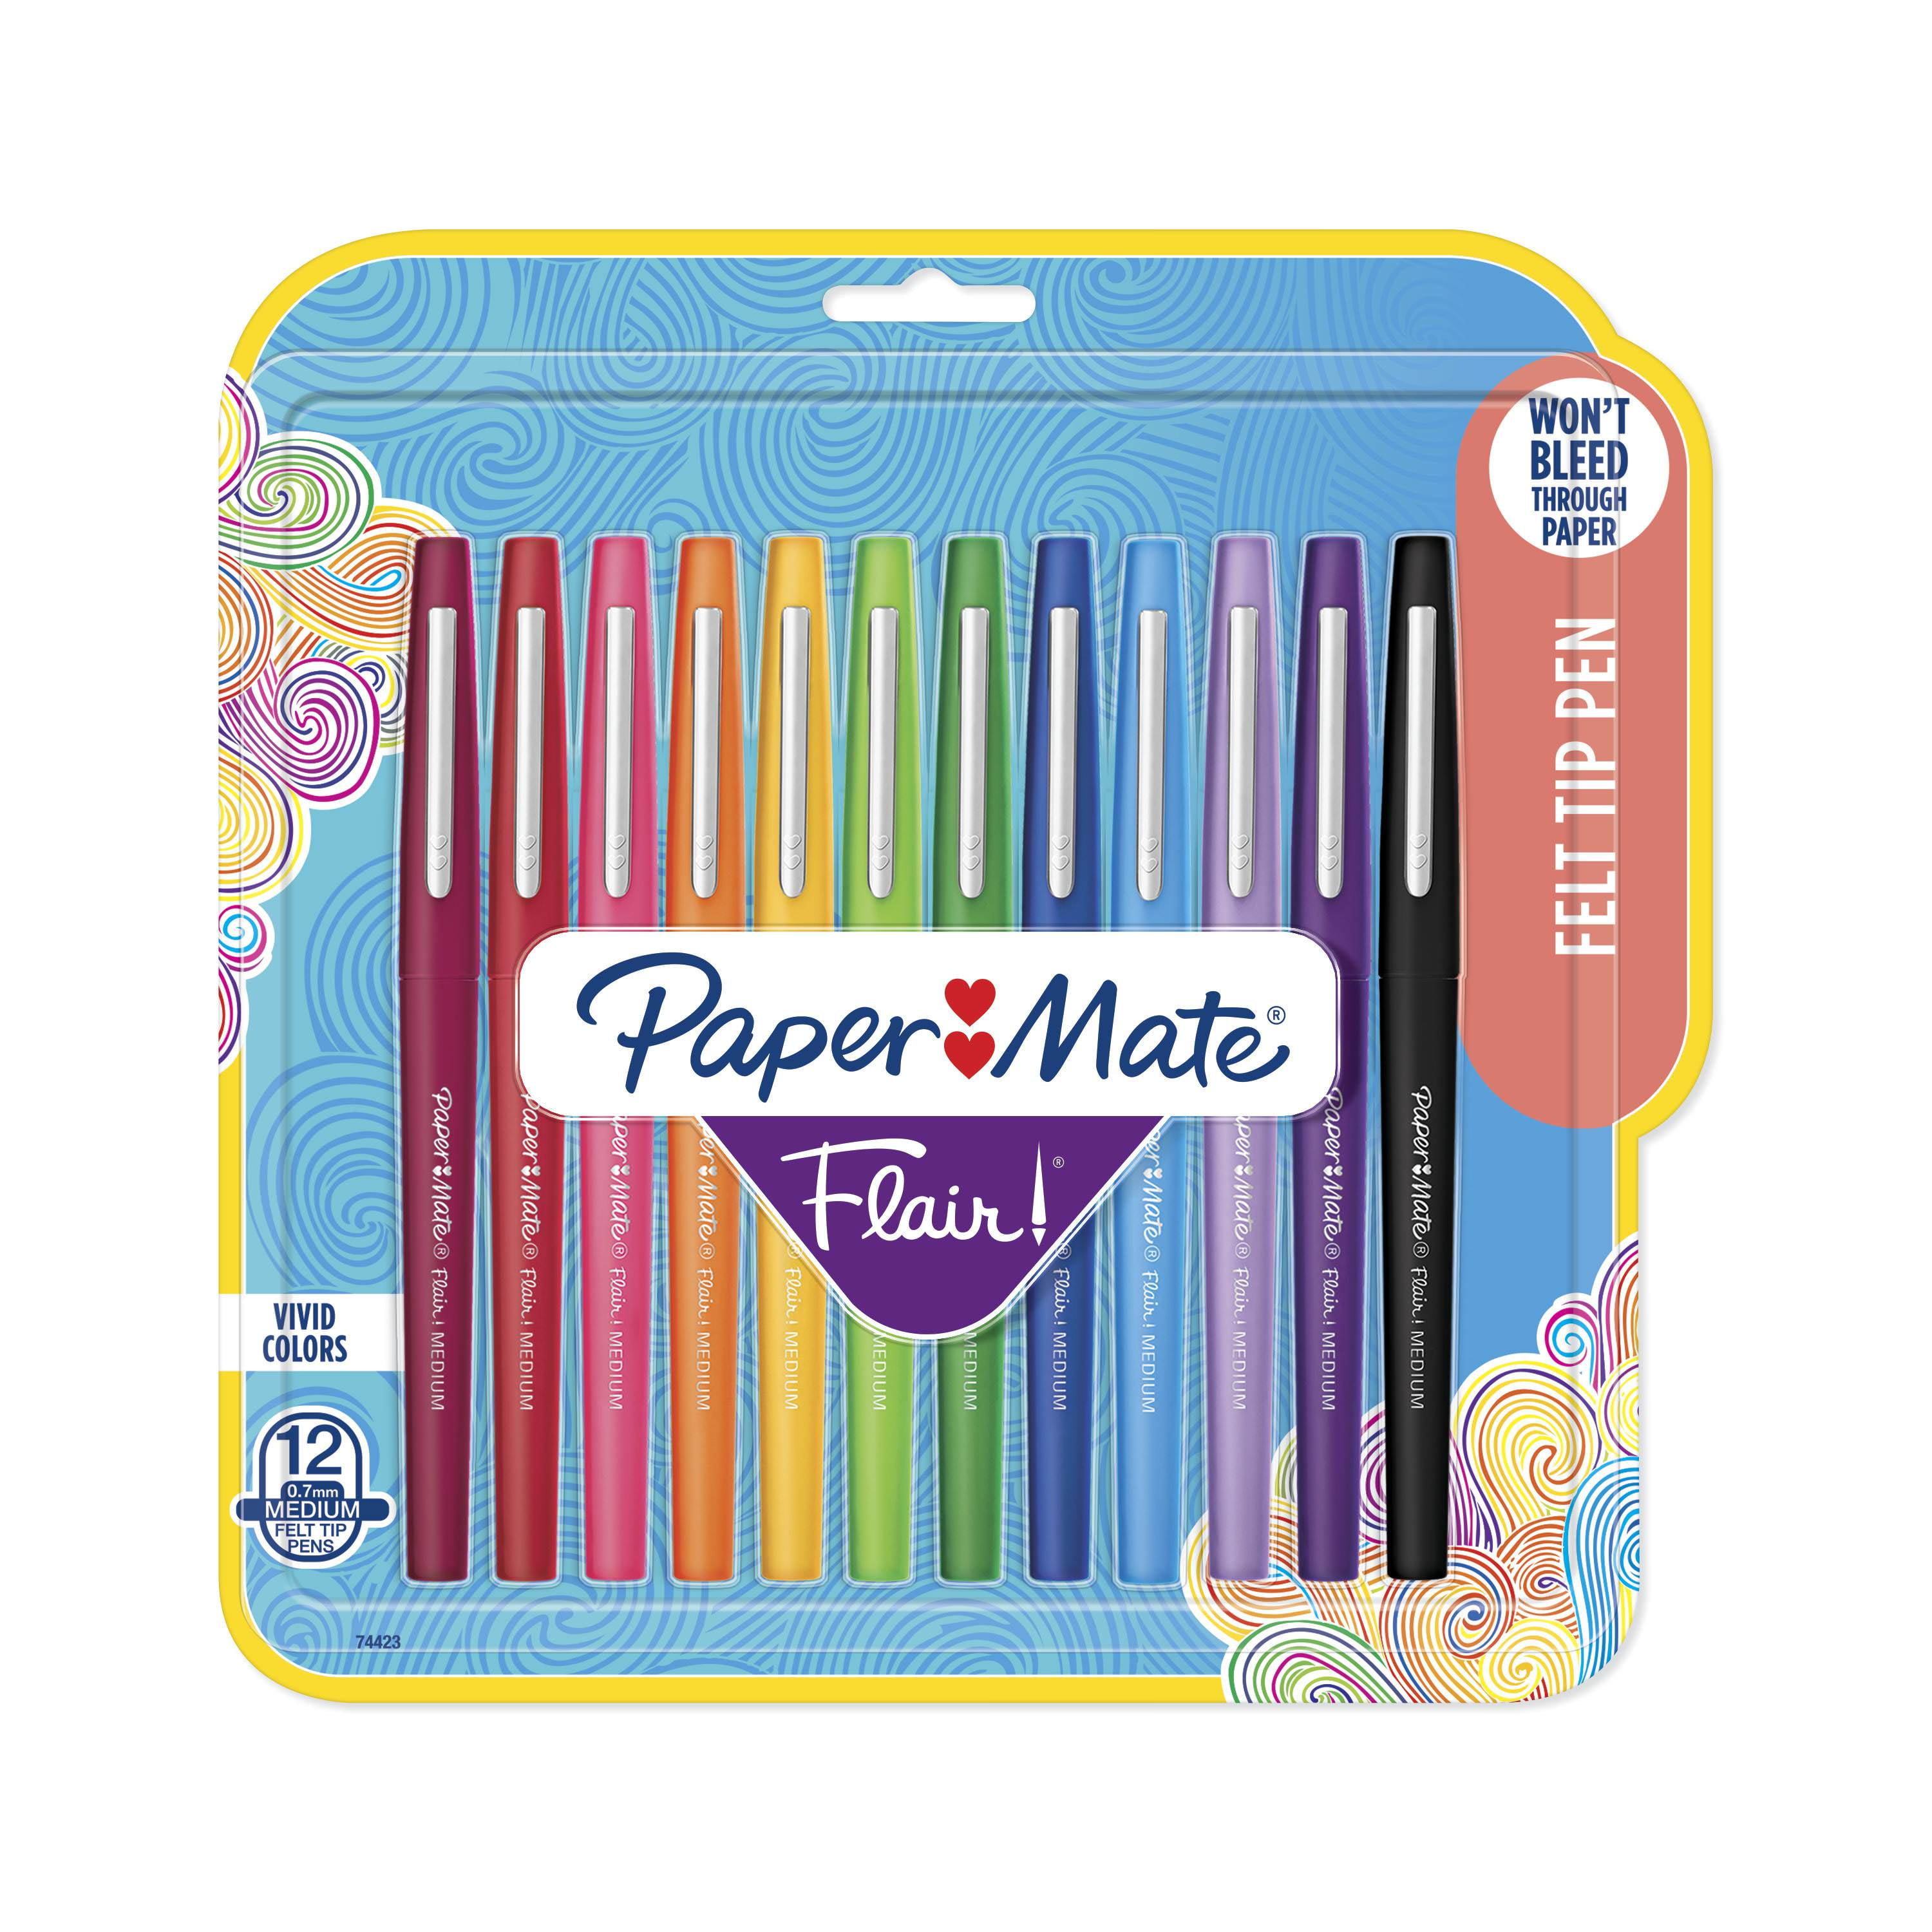 Medium Point Black 0.7mm Paper Mate Flair Felt Tip Pens